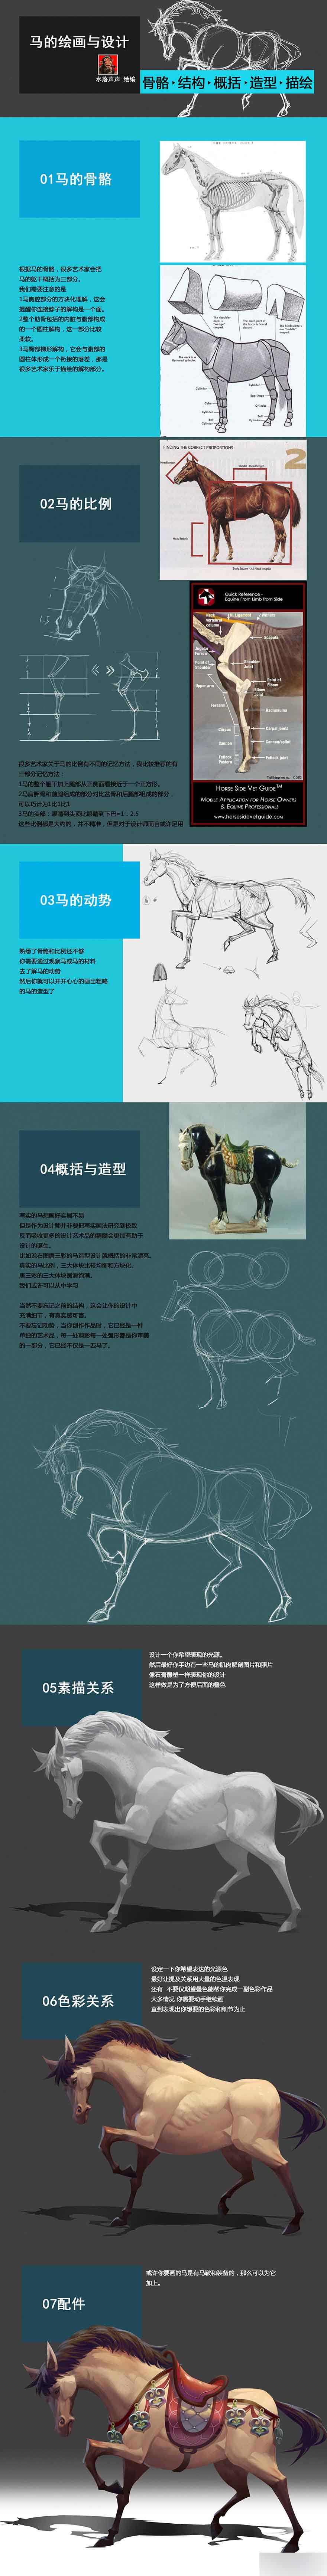 painter画马的流程和马的造型设计分享2